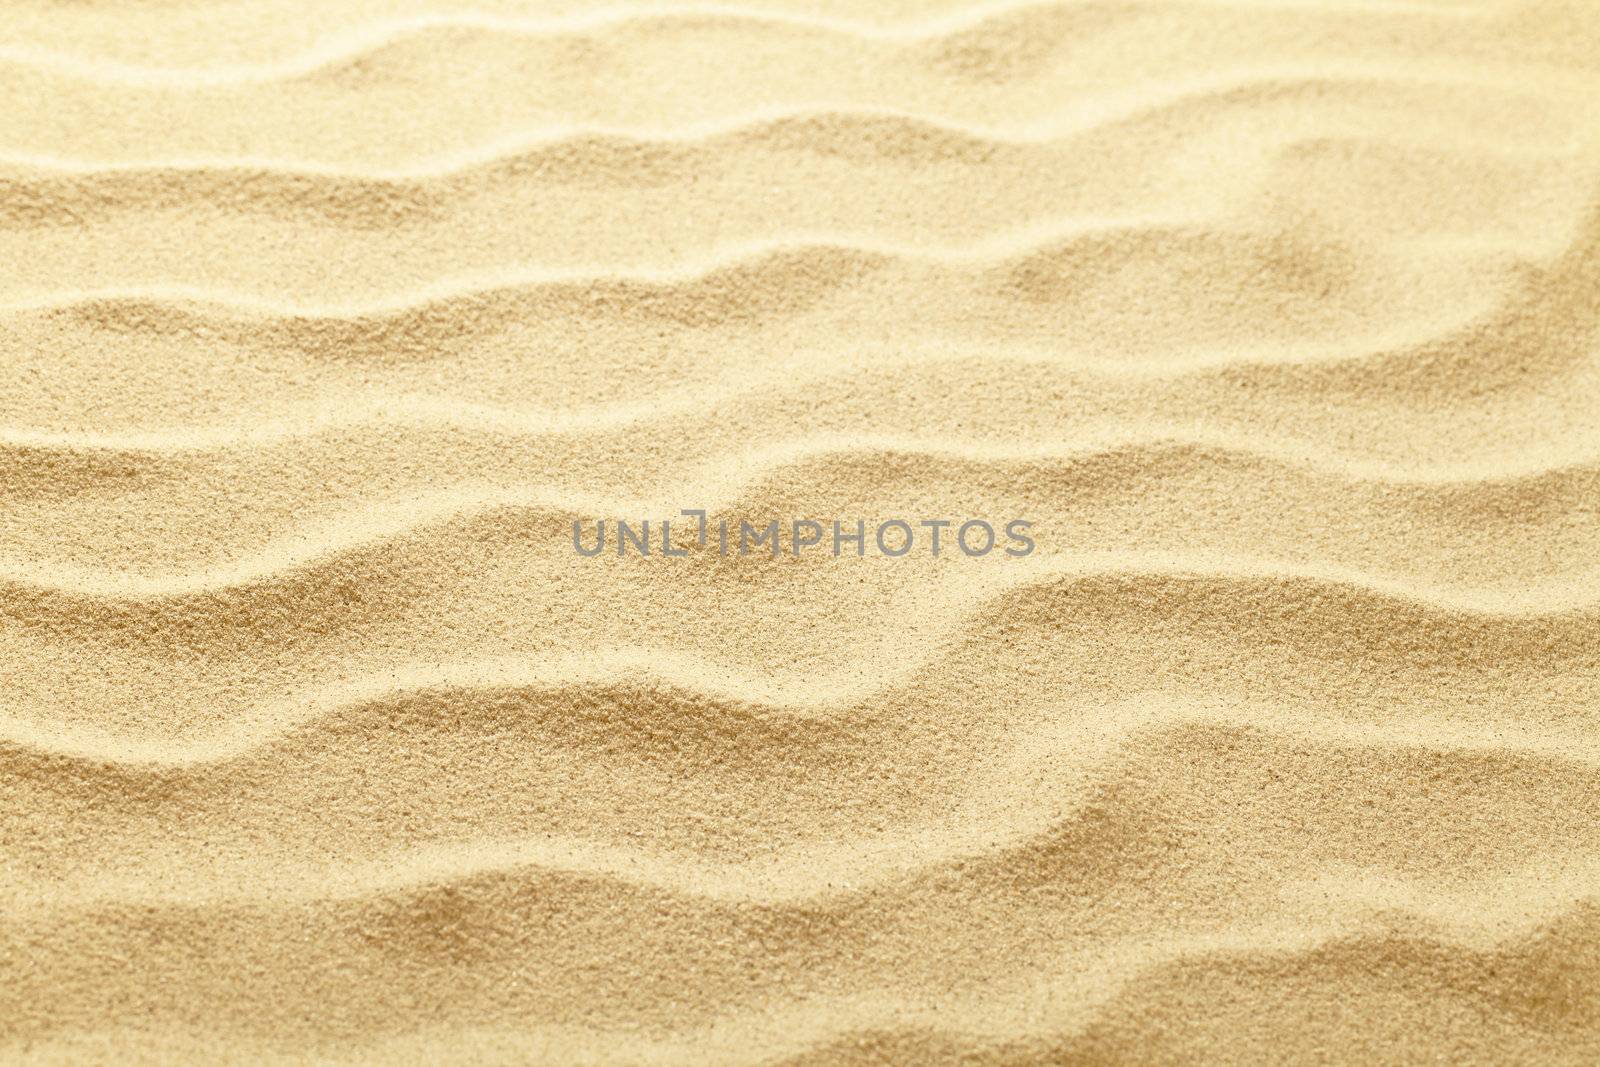 Sandy beach summer background. Sand texture. Copy space